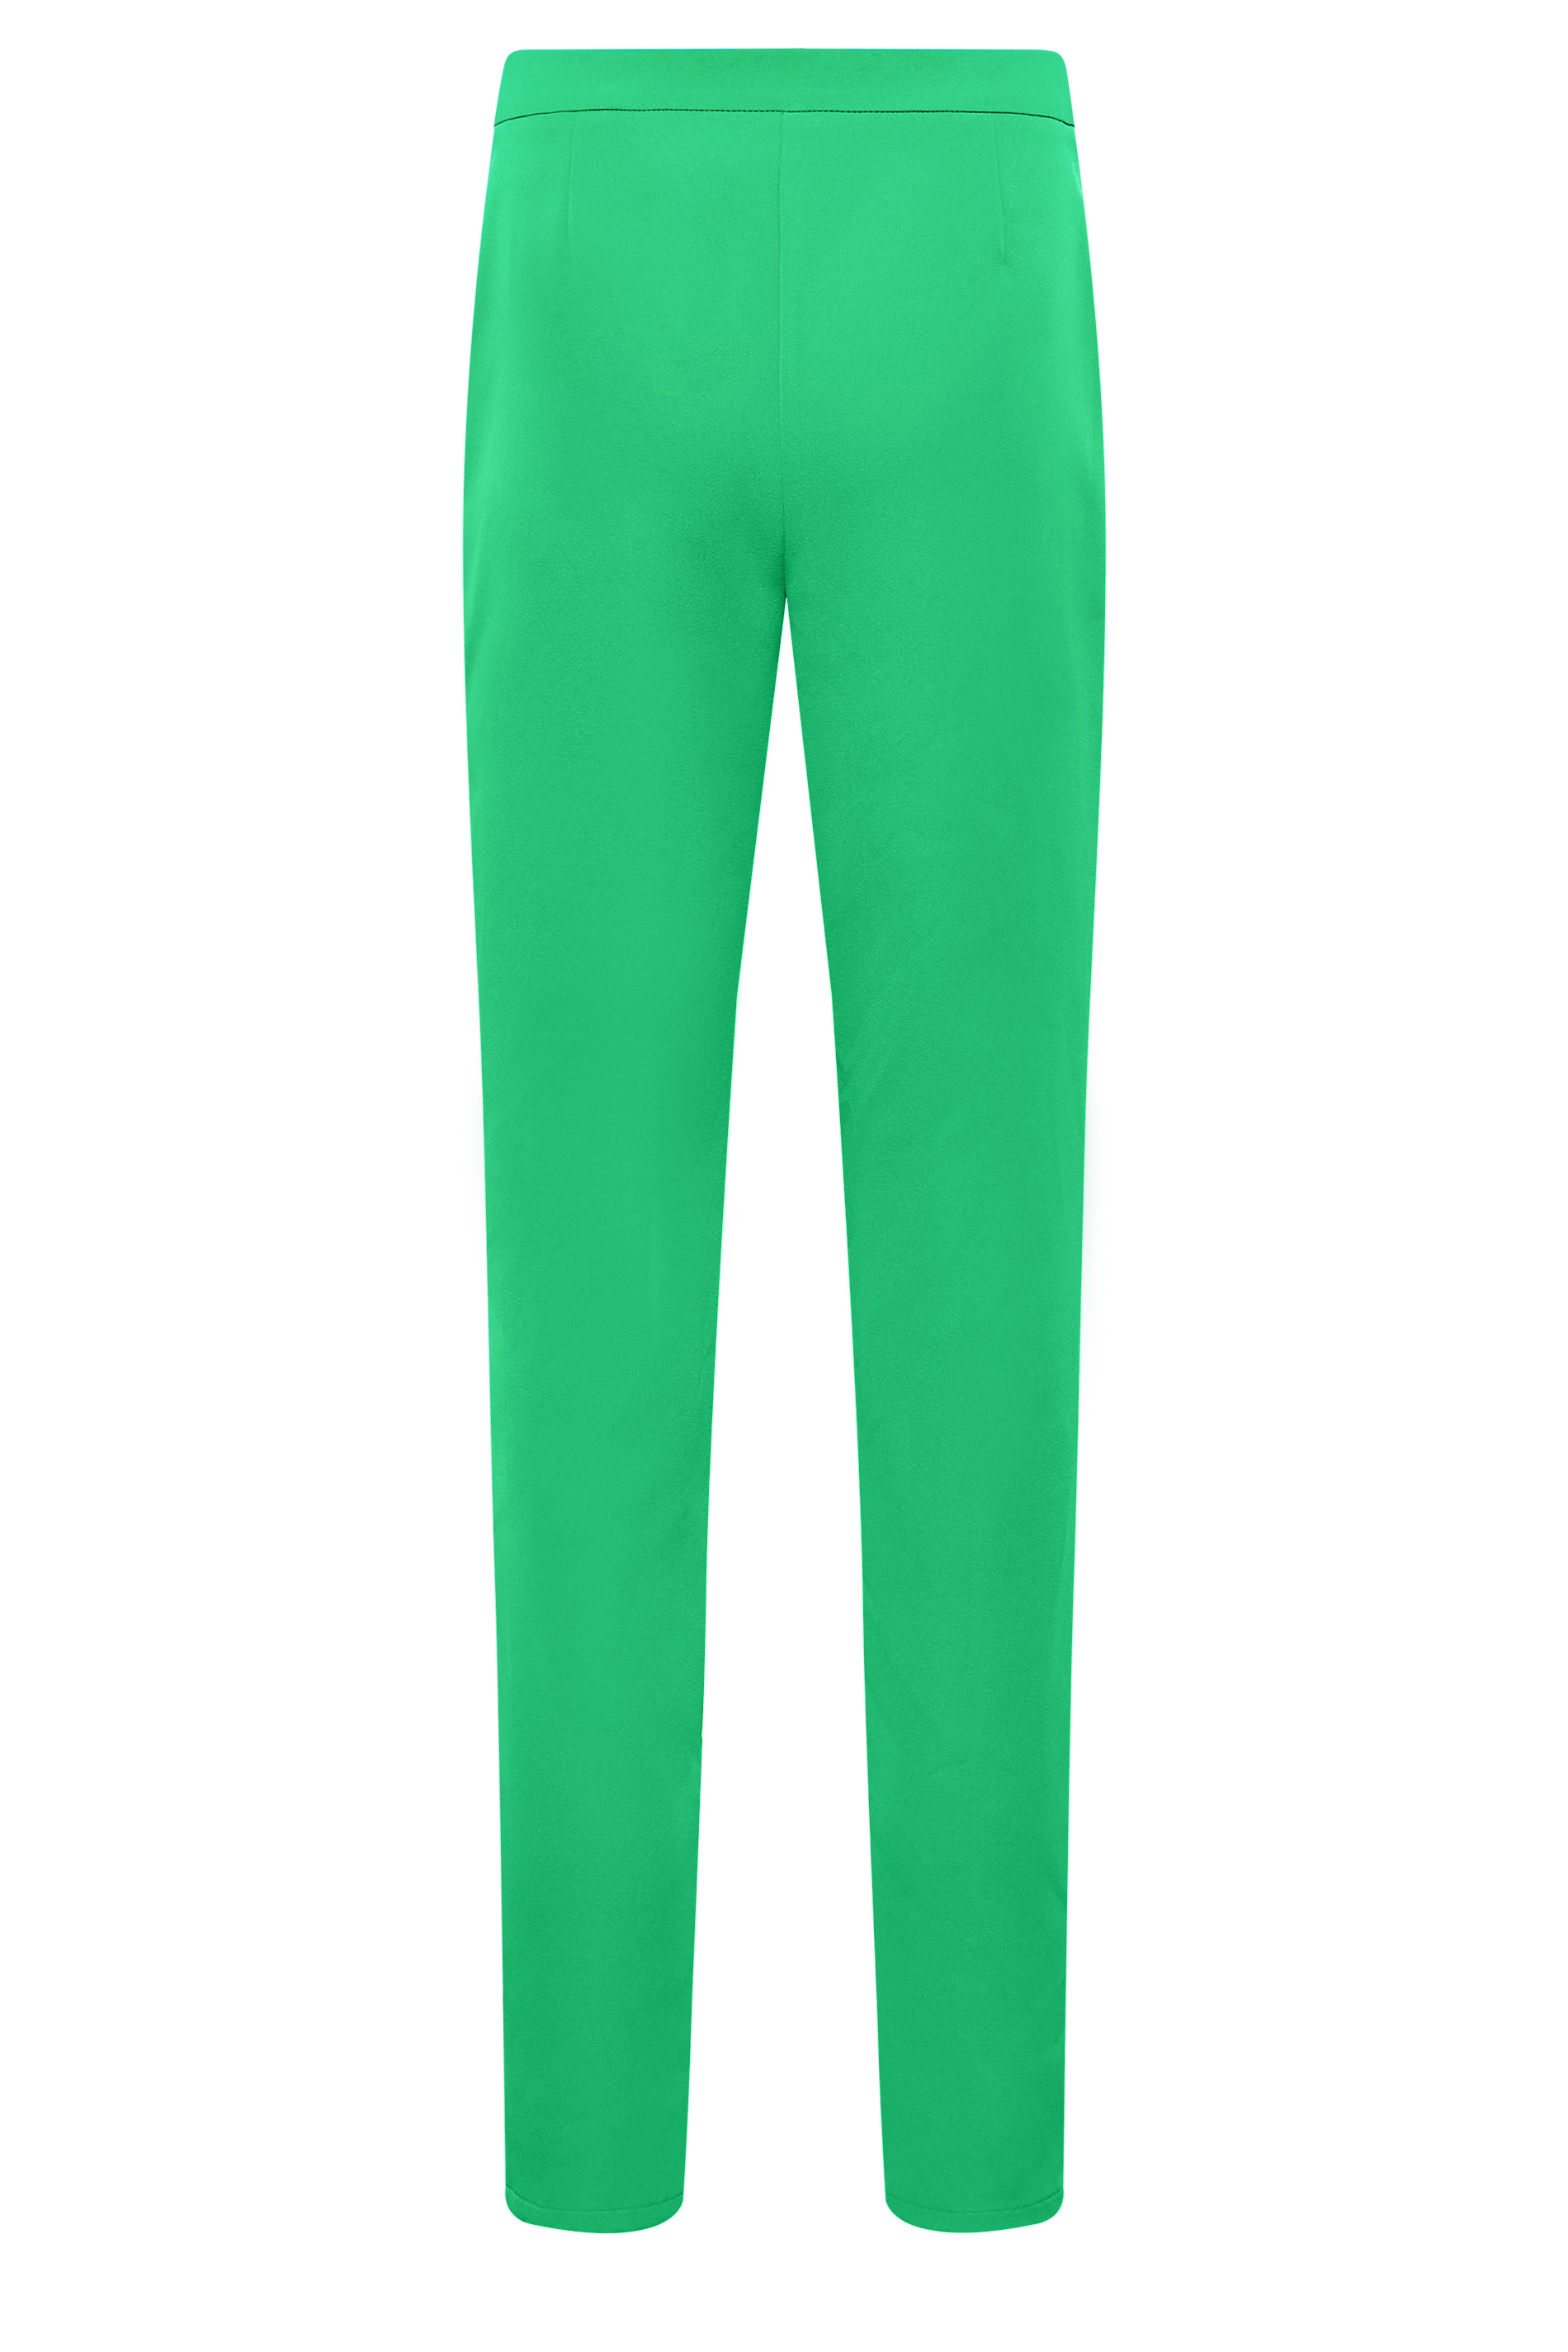 LTS Tall Women's Green Slim Leg Trousers | Long Tall Sally 3